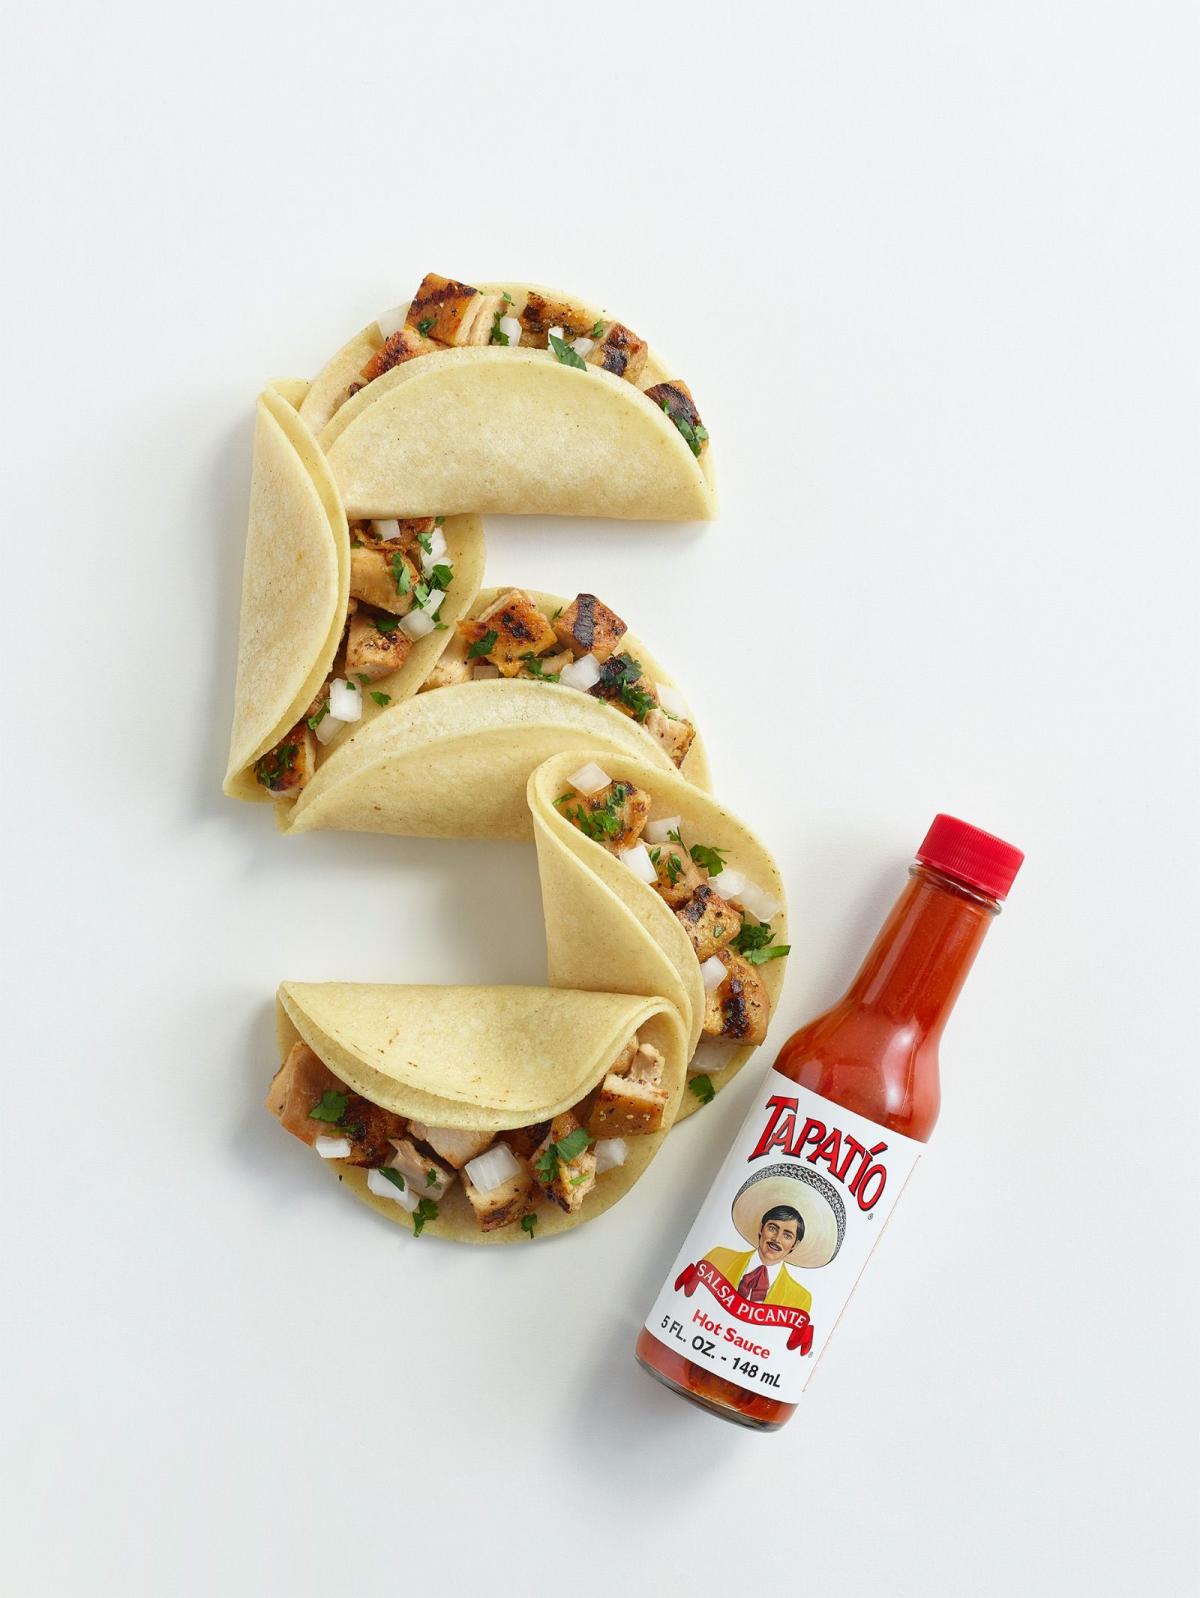 Tapatio Hot Sauce, 5 fl oz - Food 4 Less